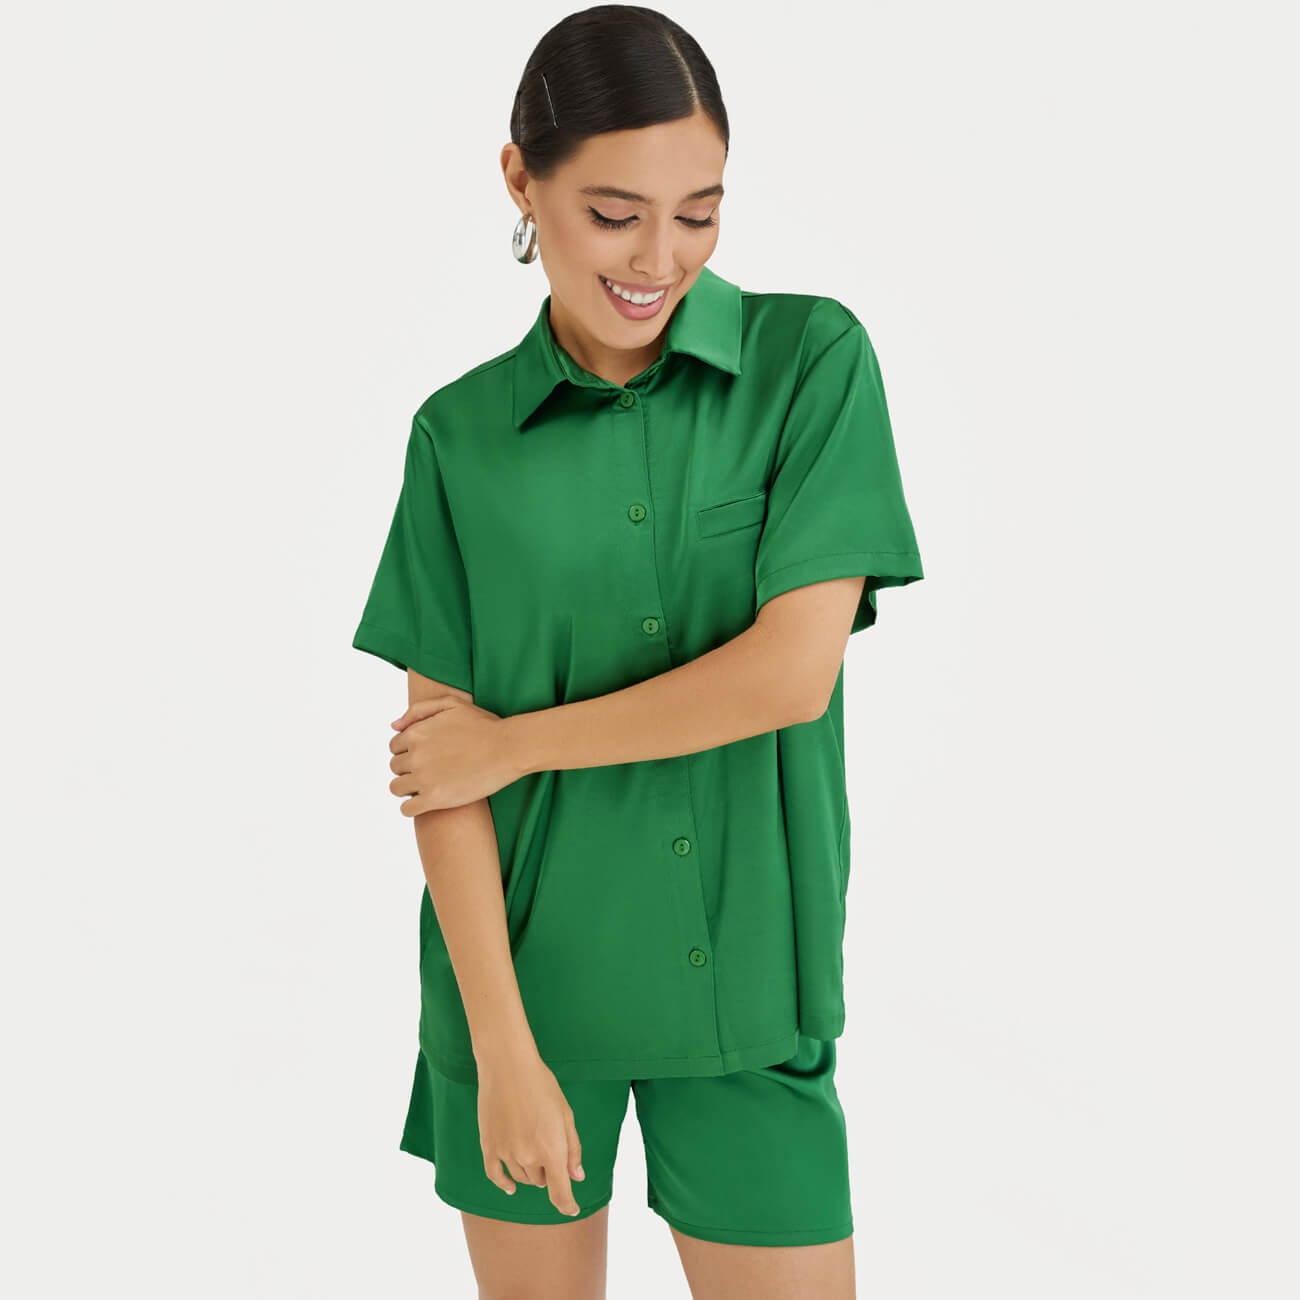 Рубашка женская, р. XL, с коротким рукавом, полиэстер/эластан, зеленая, Madeline рубашка женская р s удлиненная с длинным рукавом полиэстер эластан зеленая madeline